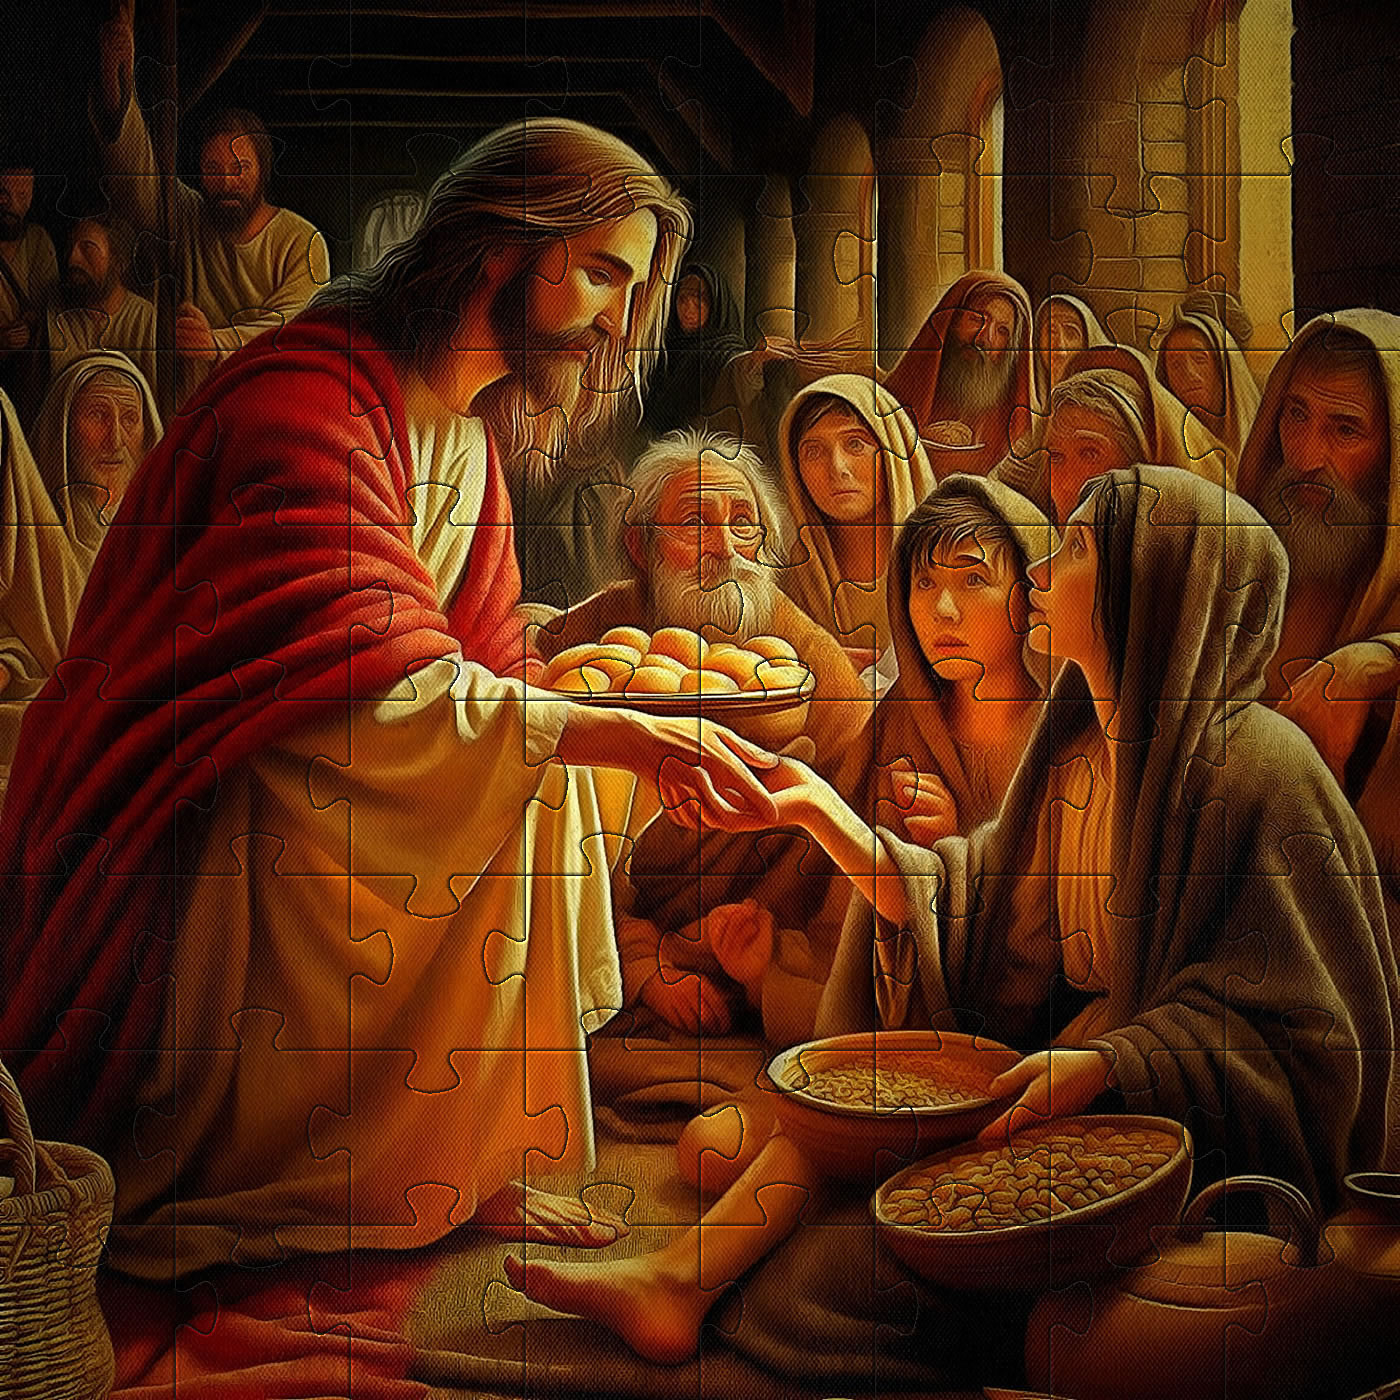 Jigsaw Version of Imaginary Bible Story Scene of Jesus Feeding the Poor